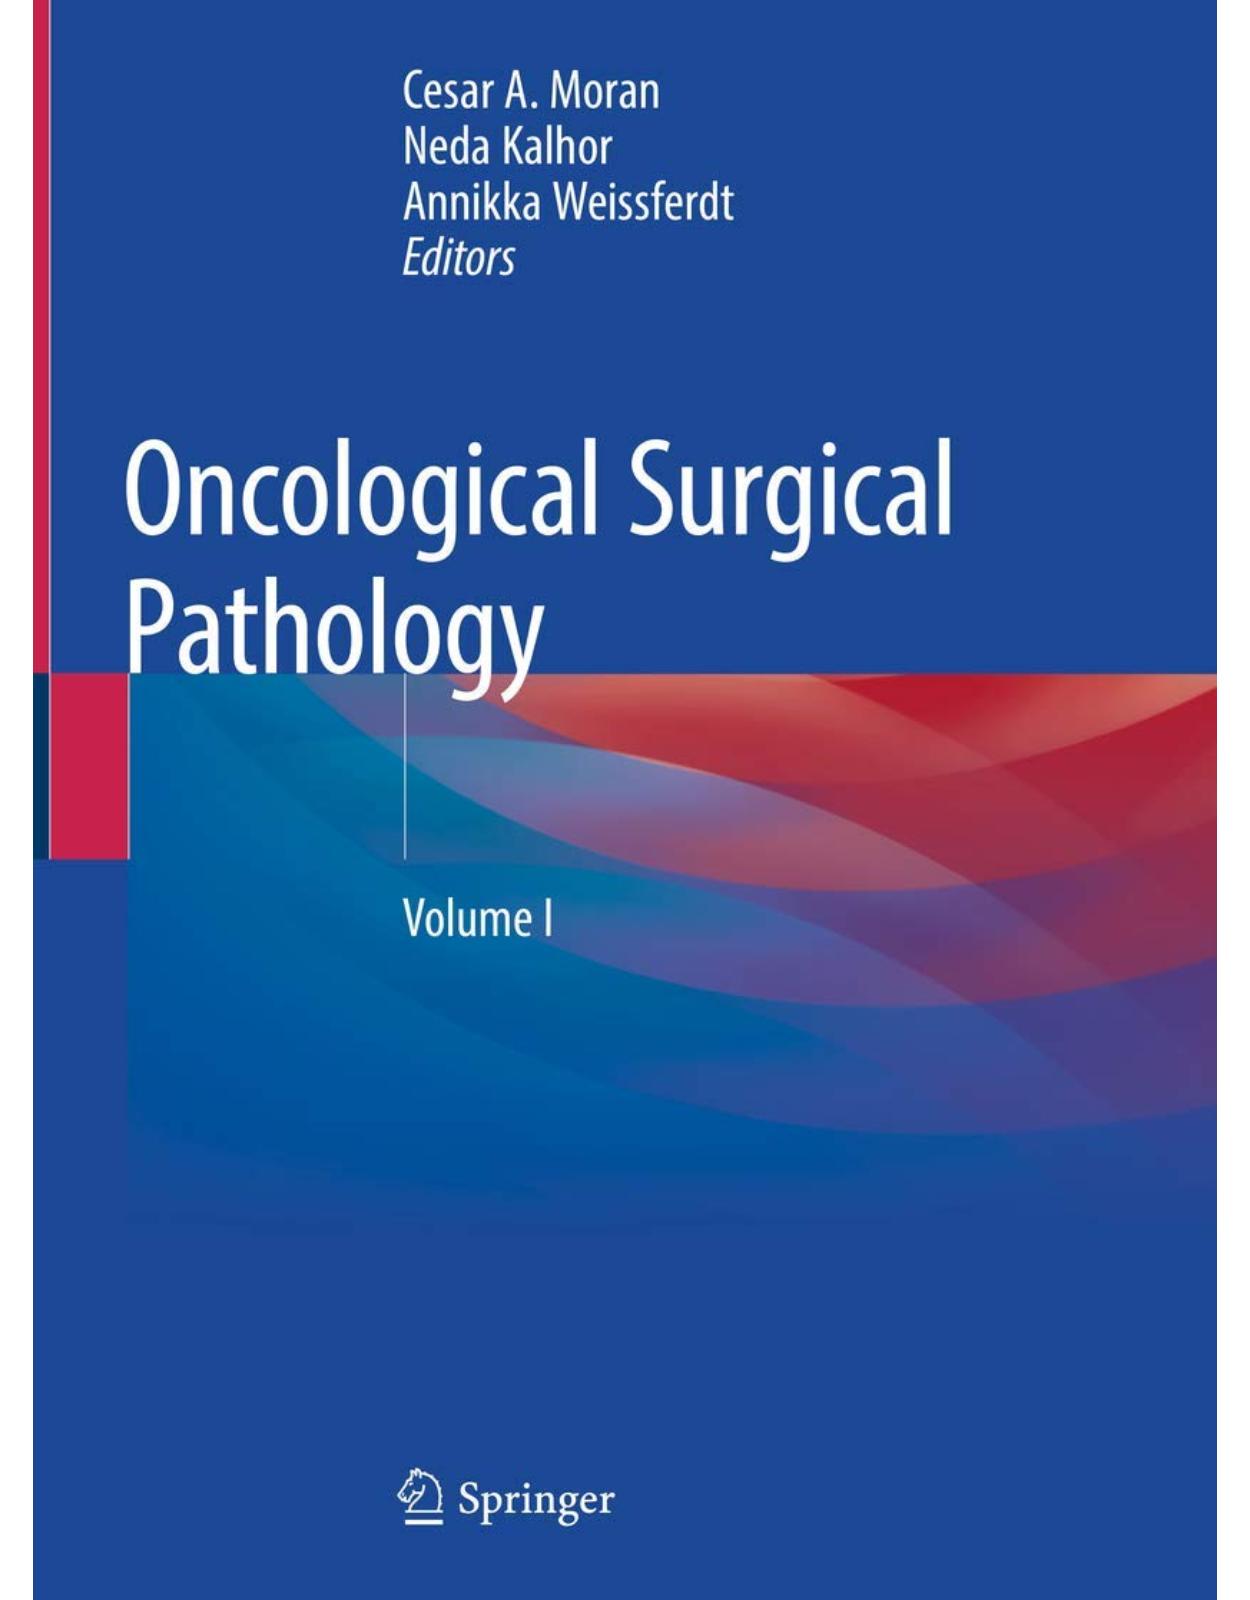 Oncological Surgical Pathology 